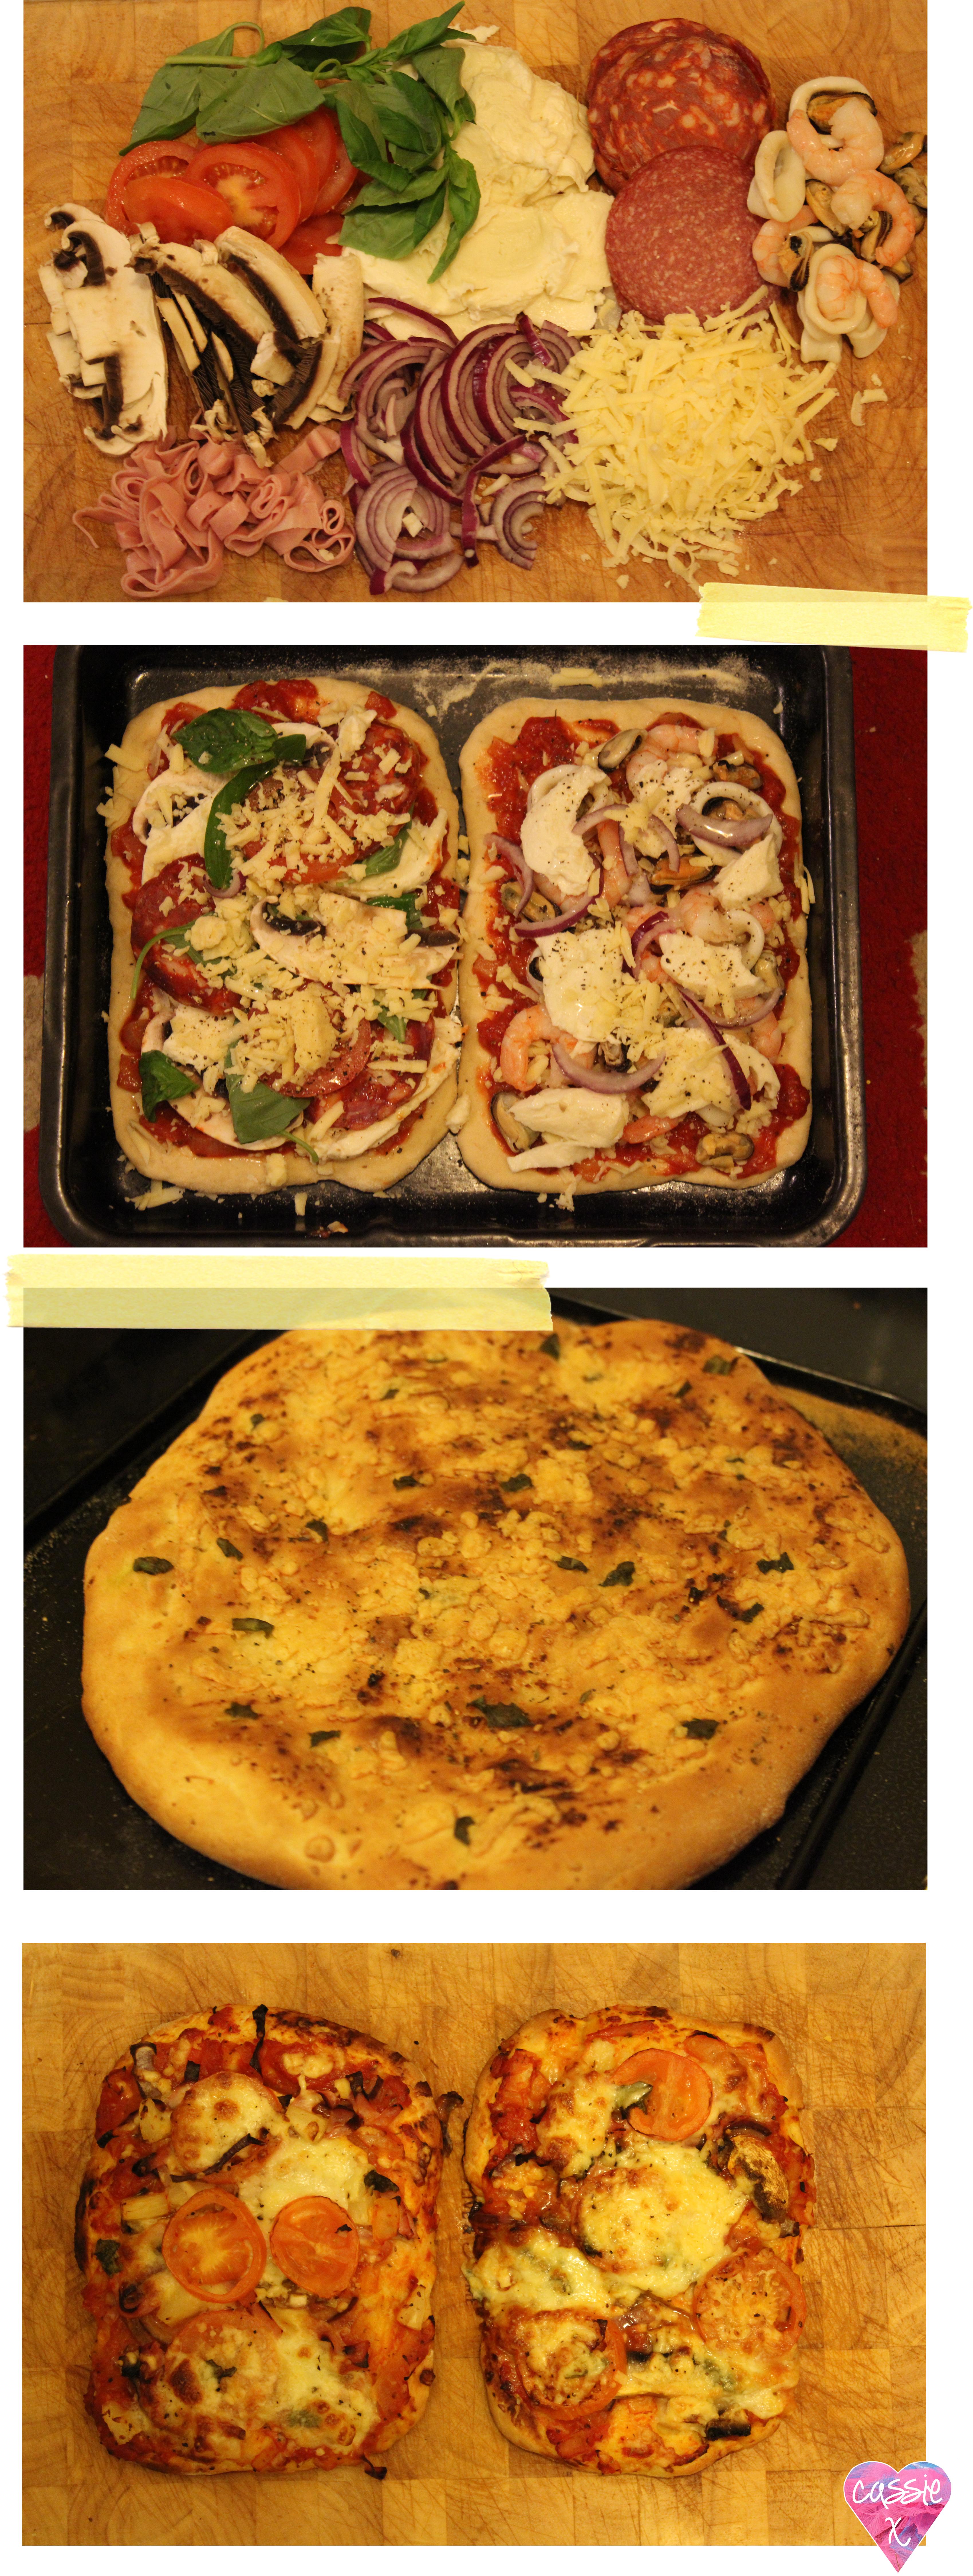 Pieday Friday recipe blog - homemade pizza dough and garlic bread recipe